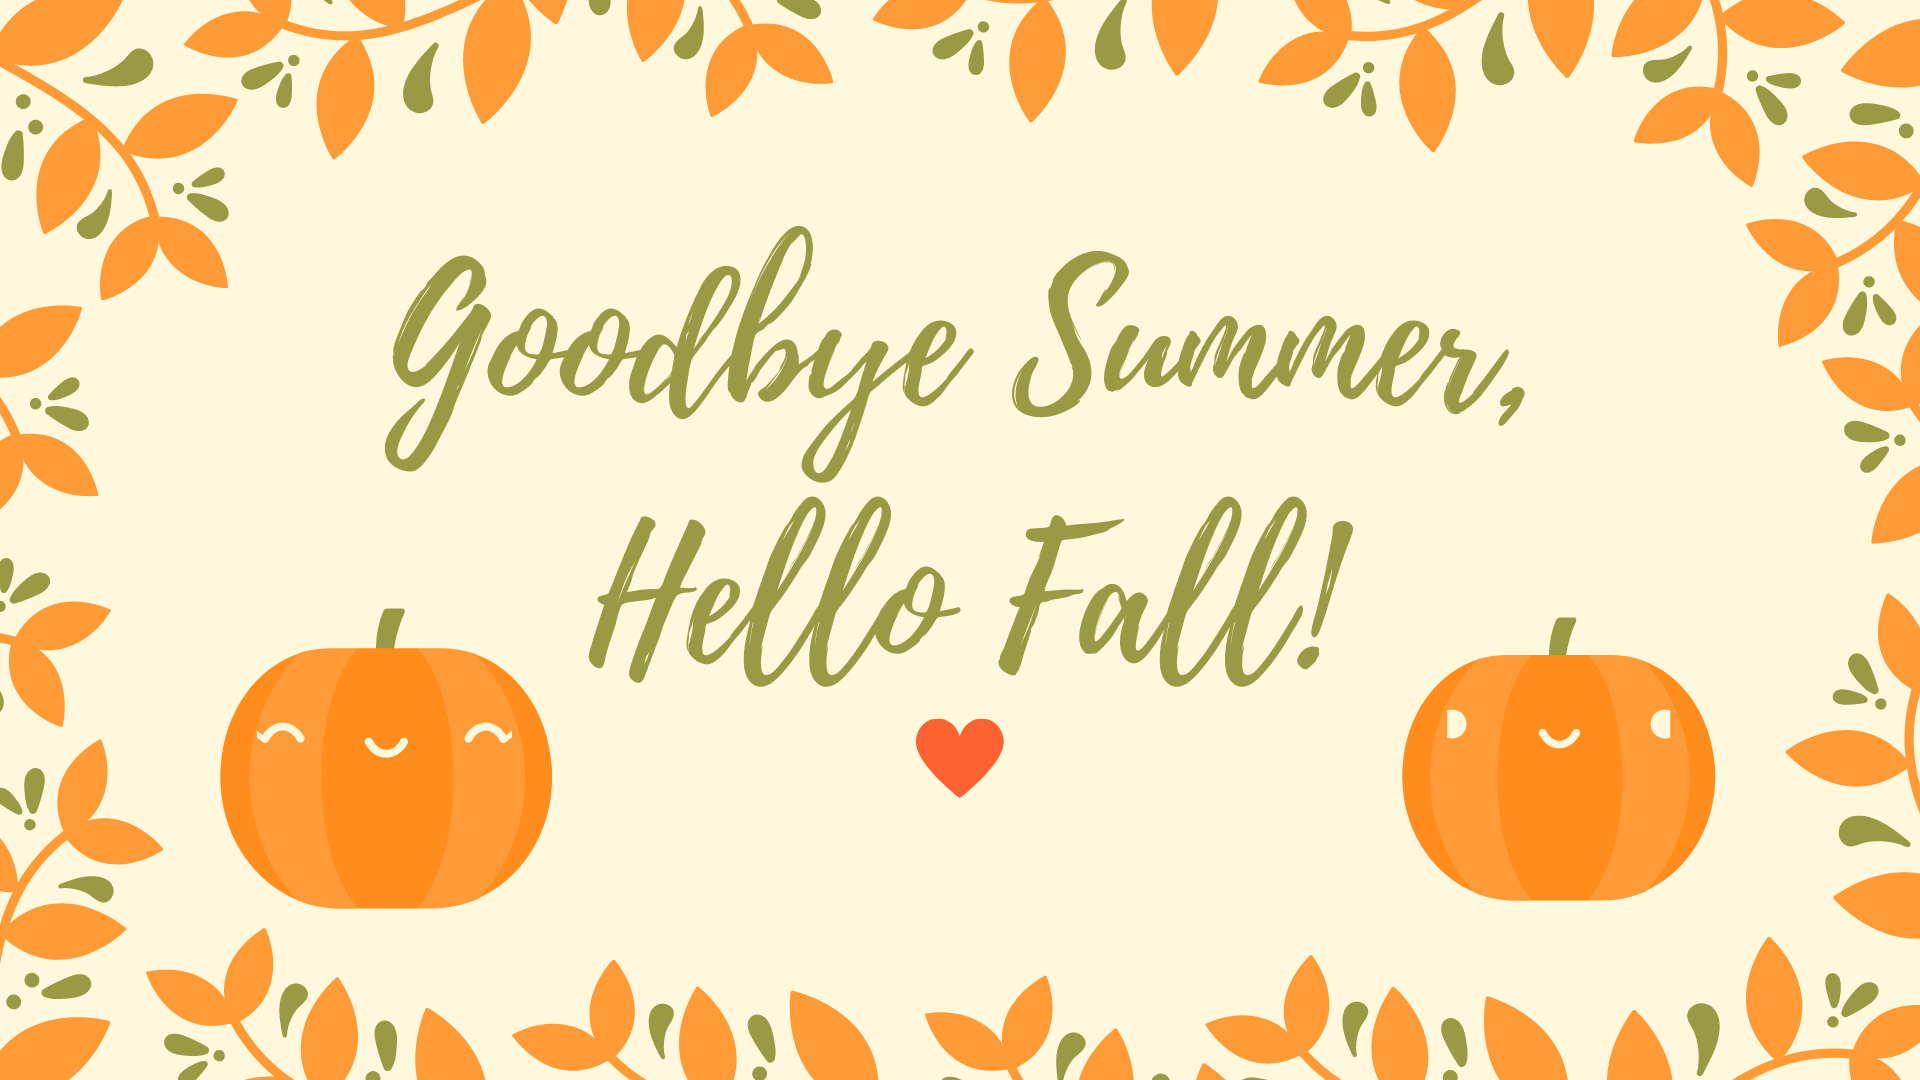 Goodbye Summer, Hello Fall!